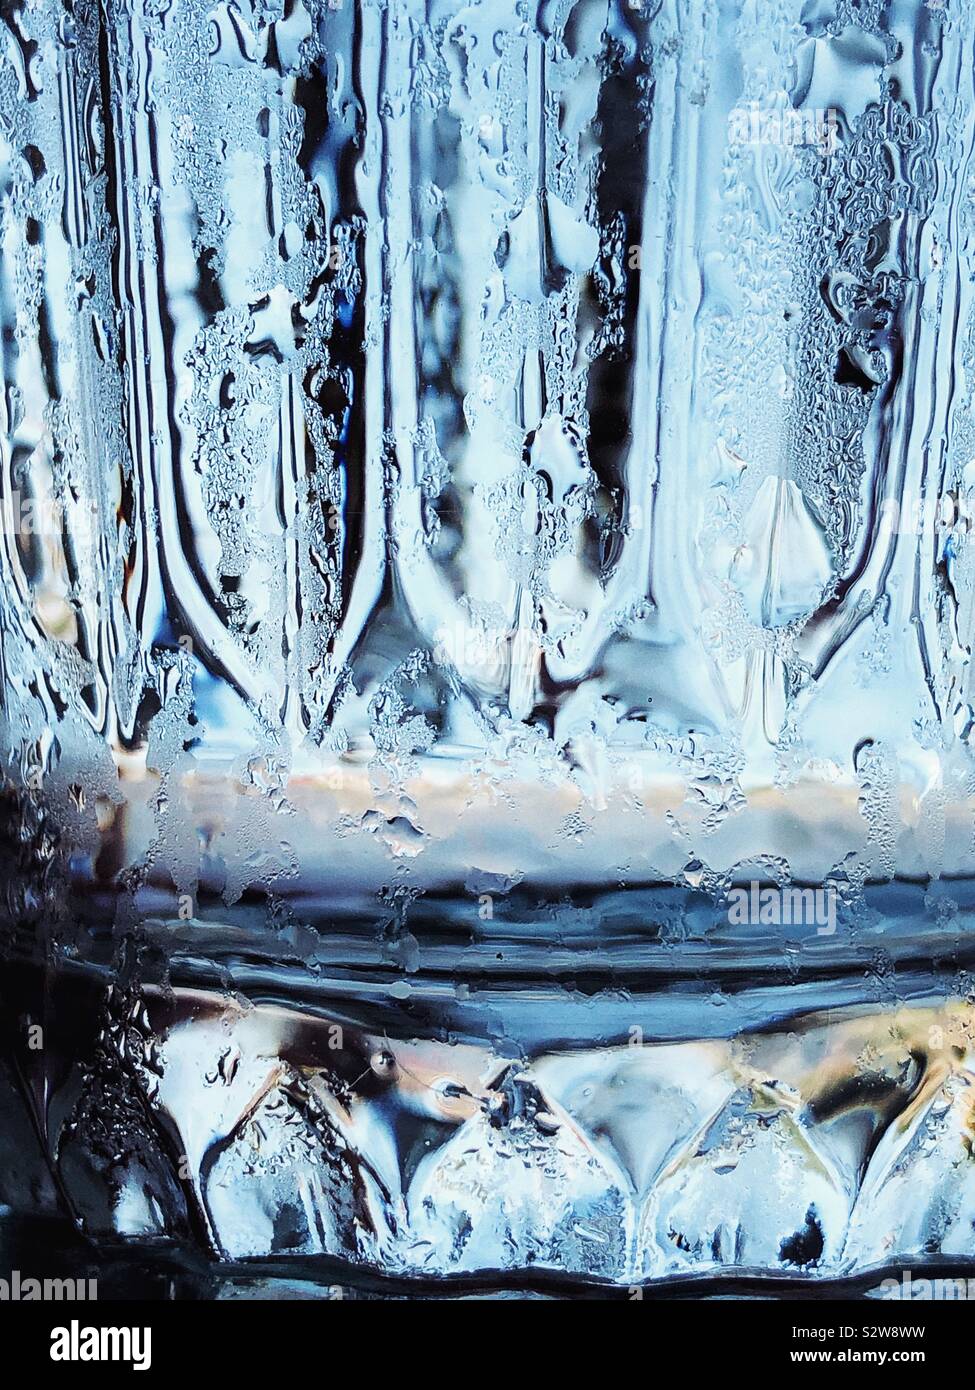 Fresh water in a glass closeup Stock Photo